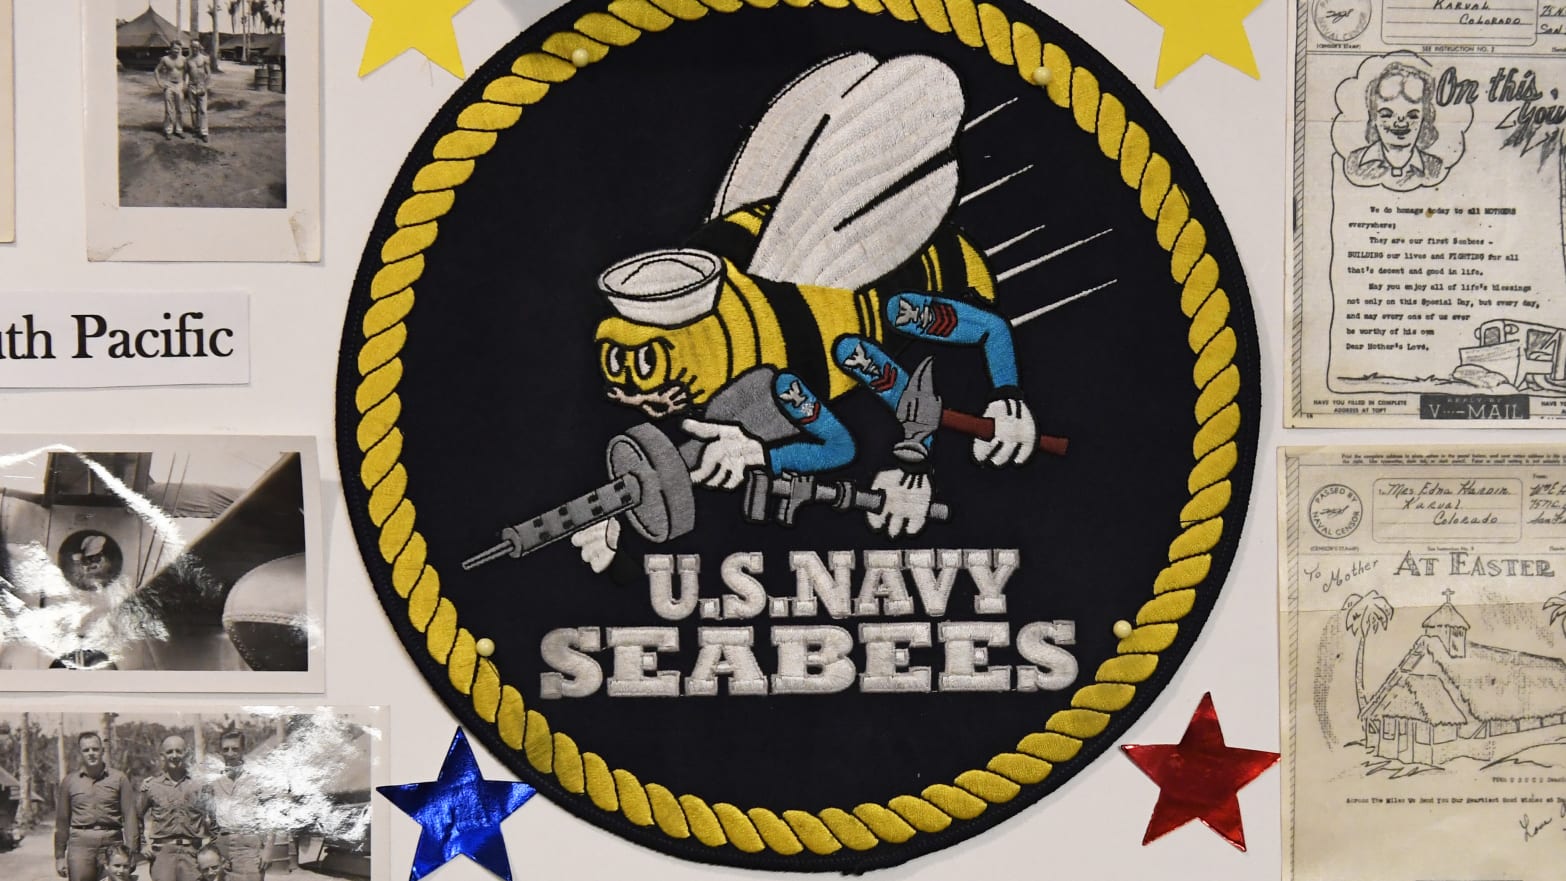 A photo of a U.S. Navy Seabees logo and associated ephemera.